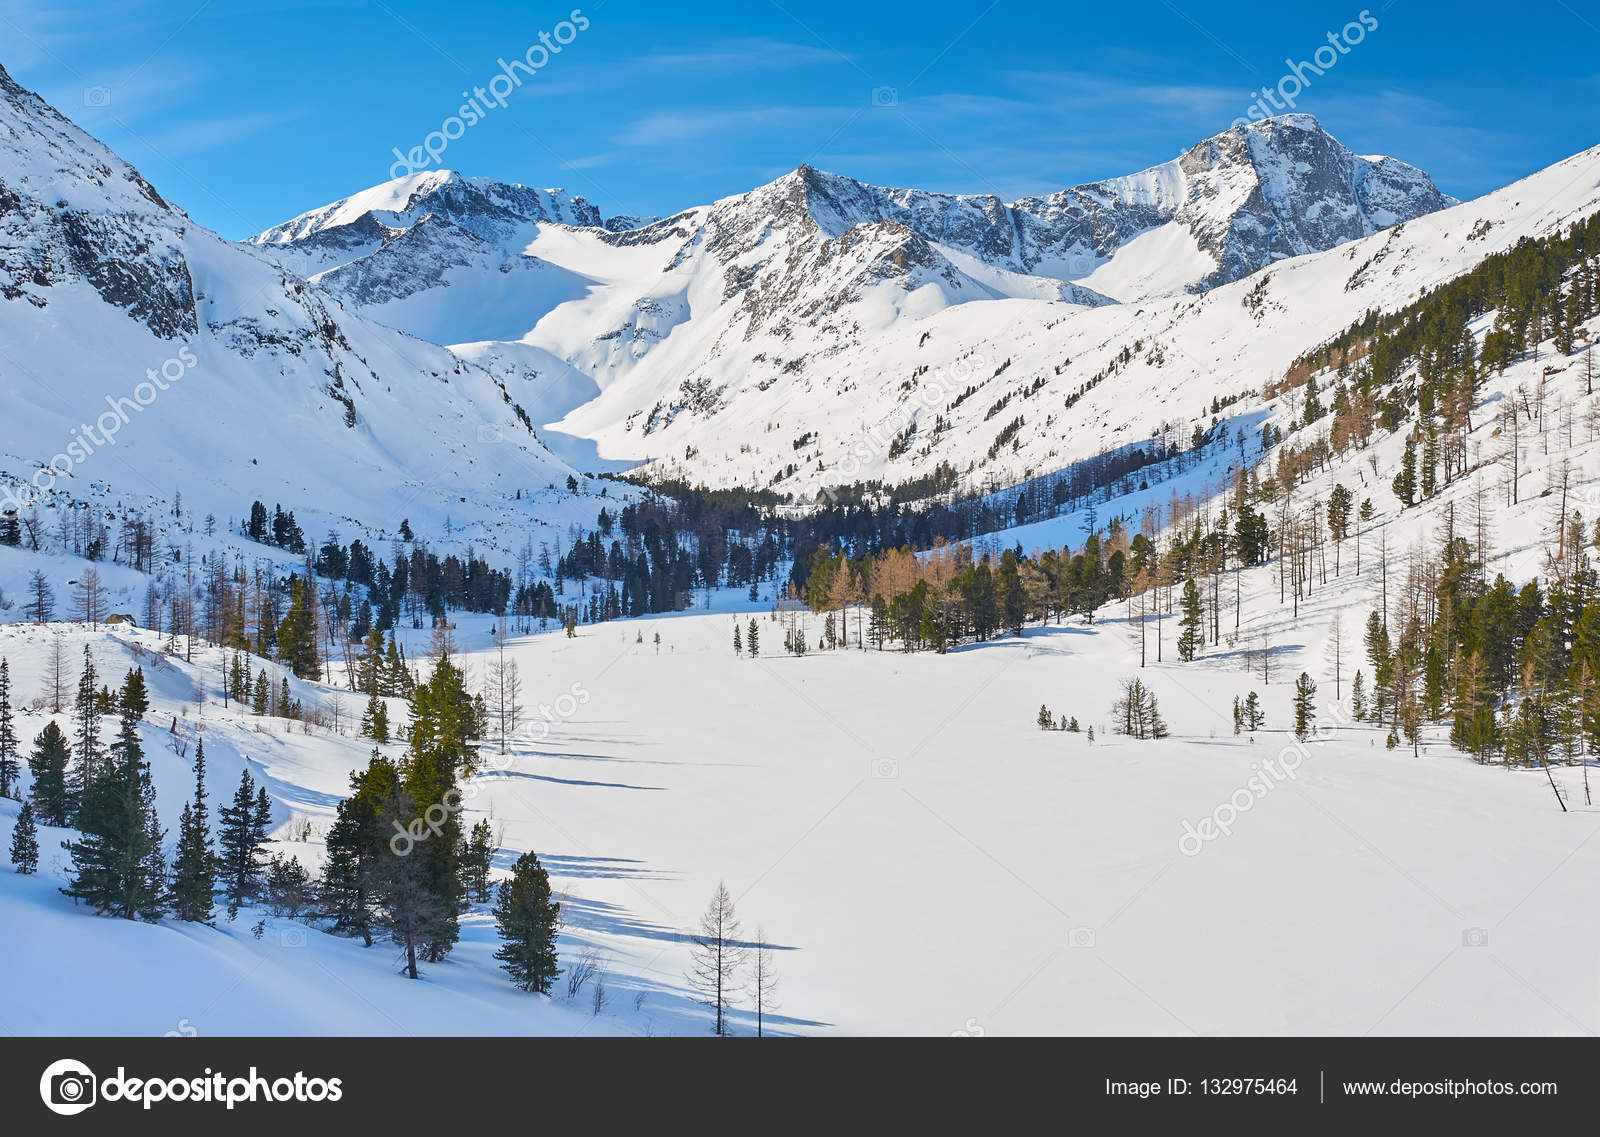 Siberia - snowy winter terrain